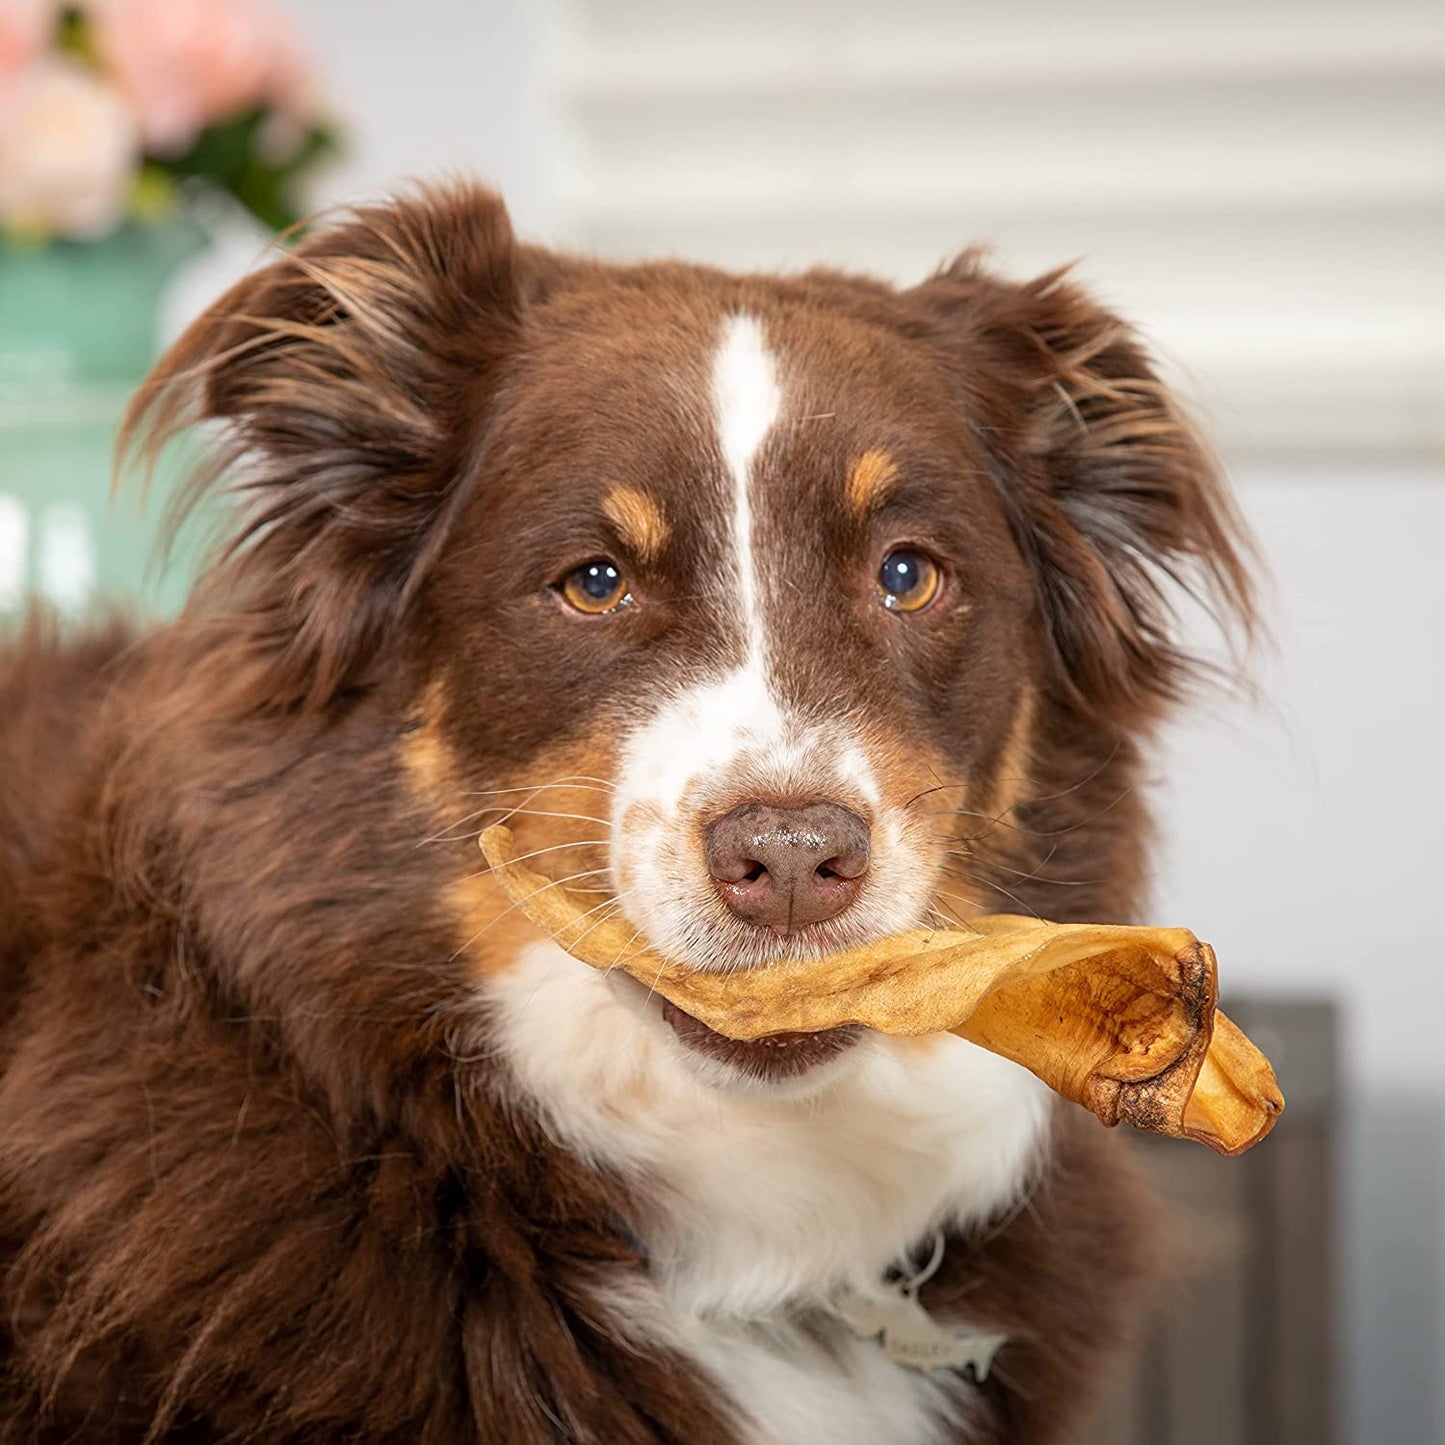 Water Buffalo Prime Select Dog Chews, All Natural Dog Bones & Dog Treats 7 Pack (Long Lasting Dog Chews, Dog Bone Assortment, Treats & Dog Bone) Grain Free Dog Chews Bones, Dog Snacks